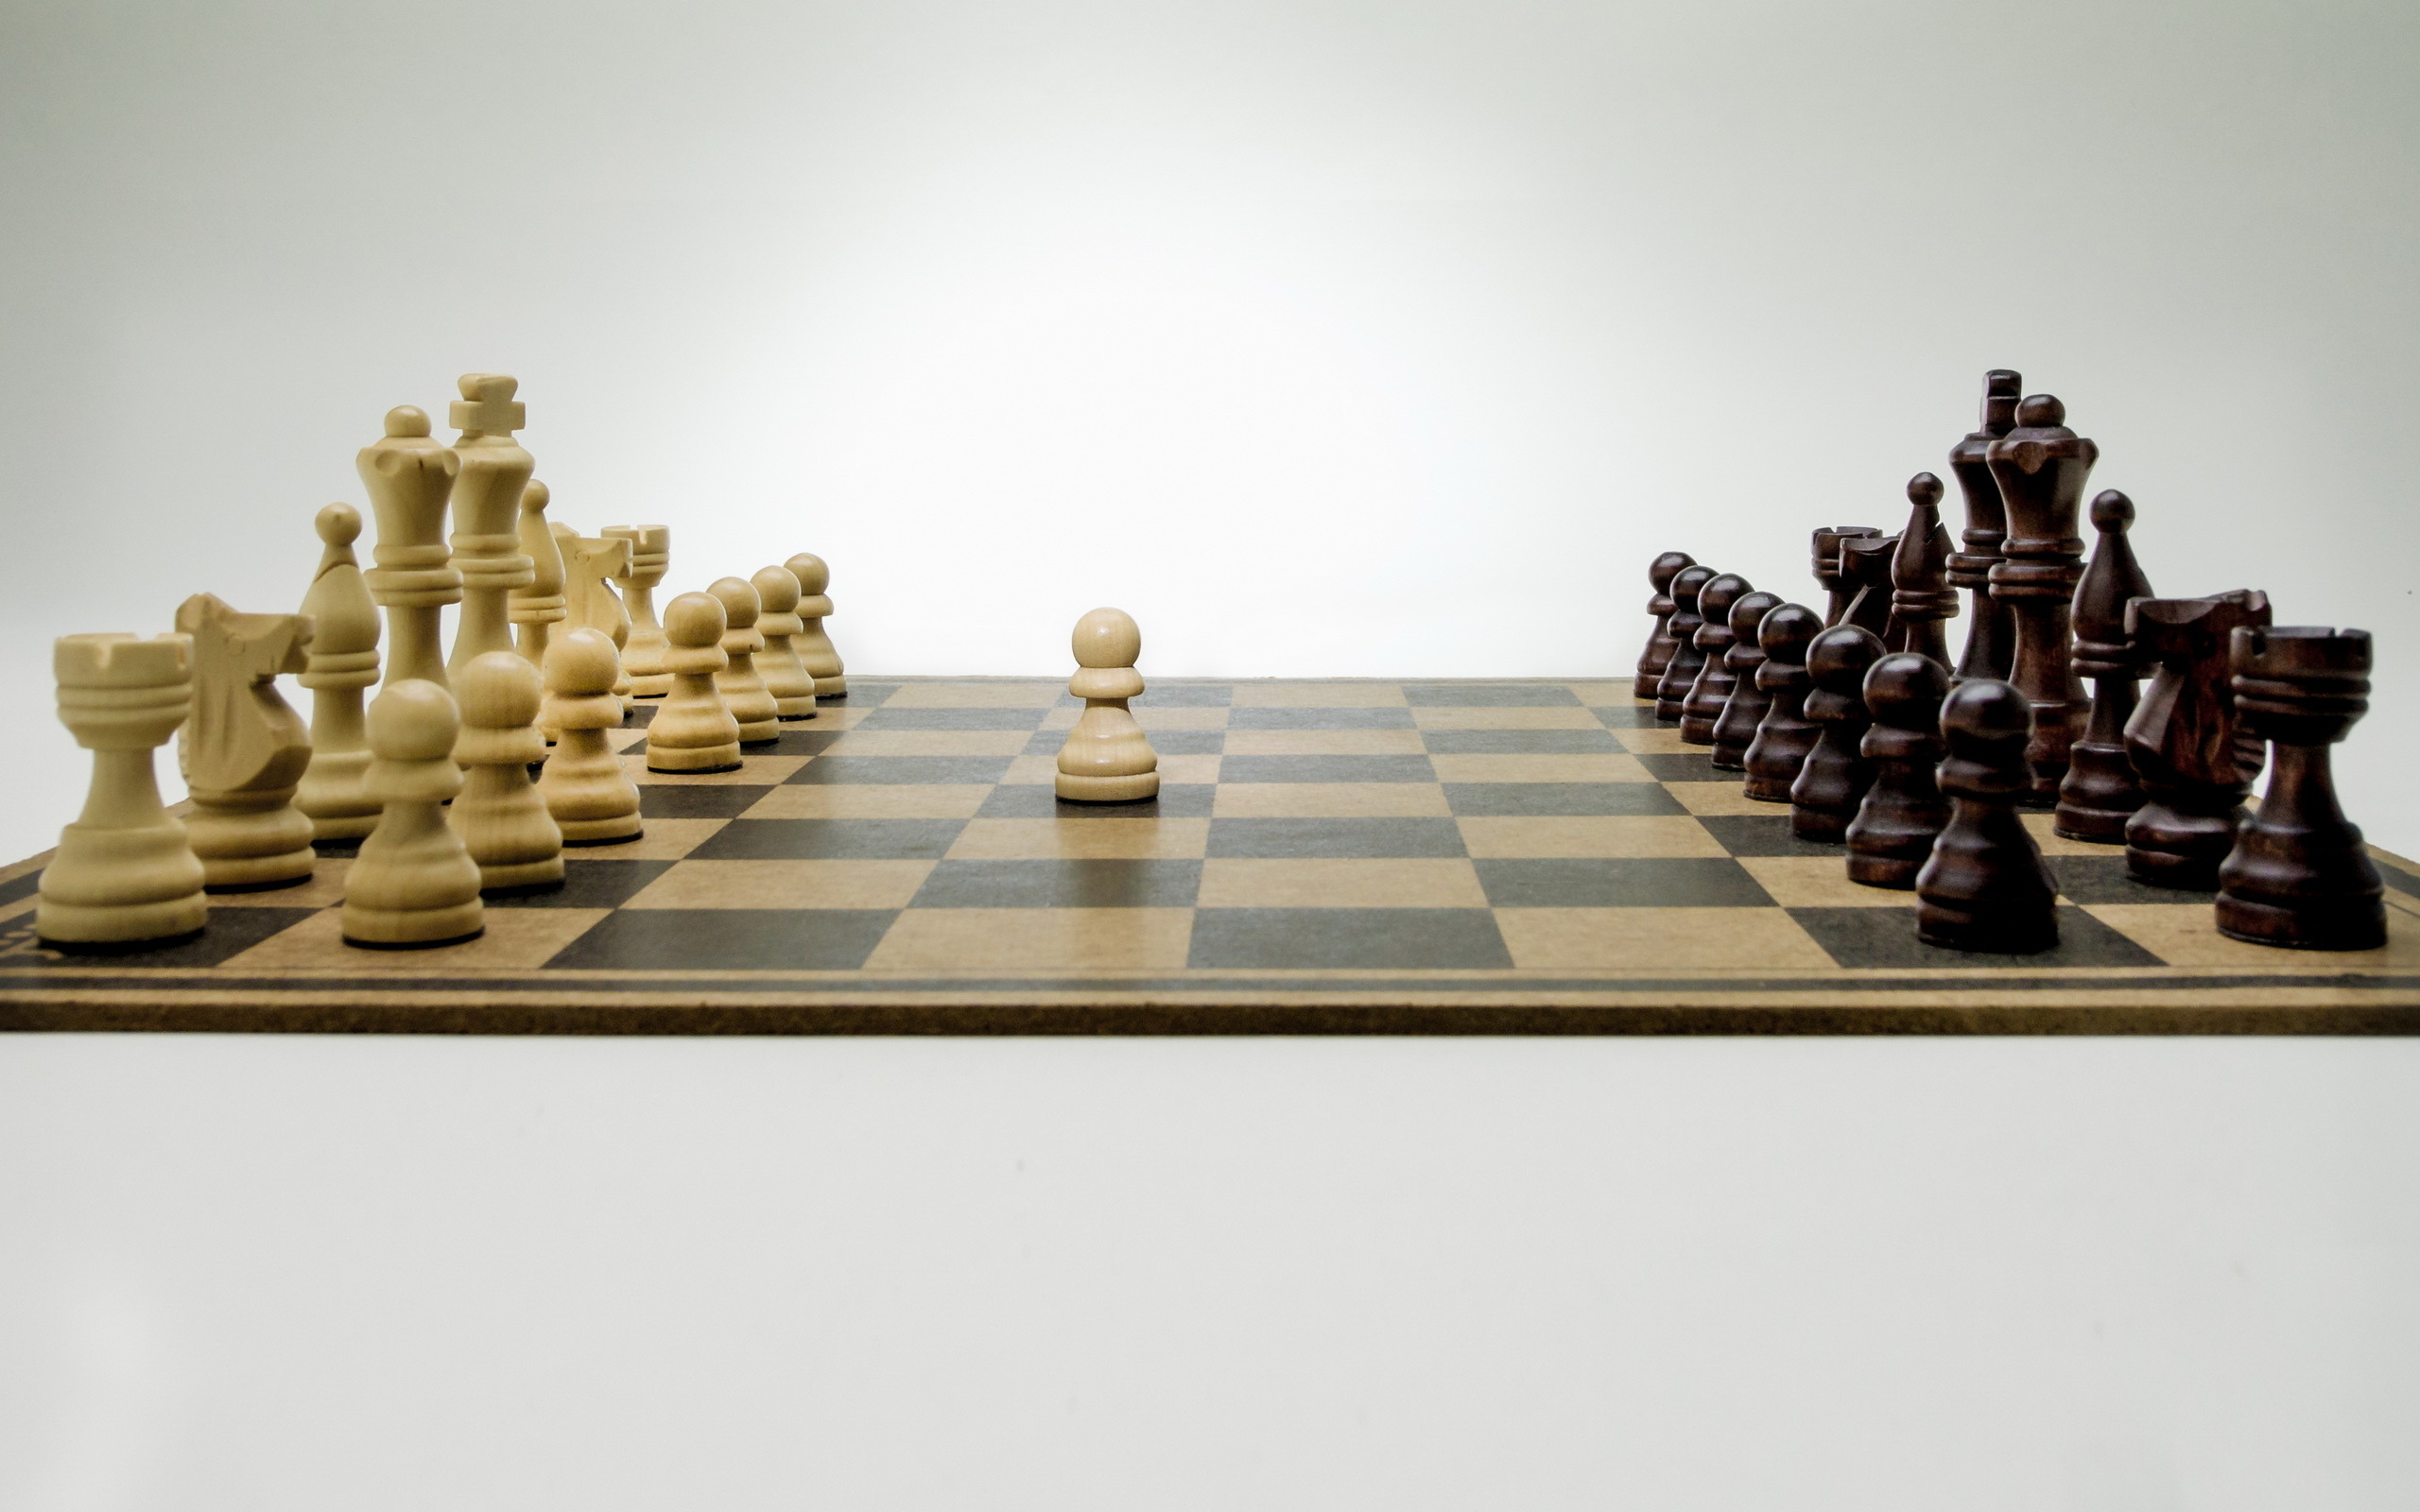 На шахматной доске 5 белых фигур. Шахматная доска с фигурами вид сбоку. Шахматы фигуры сбоку. Шахматы доска. Шахматная доска с фигурами в перспективе.